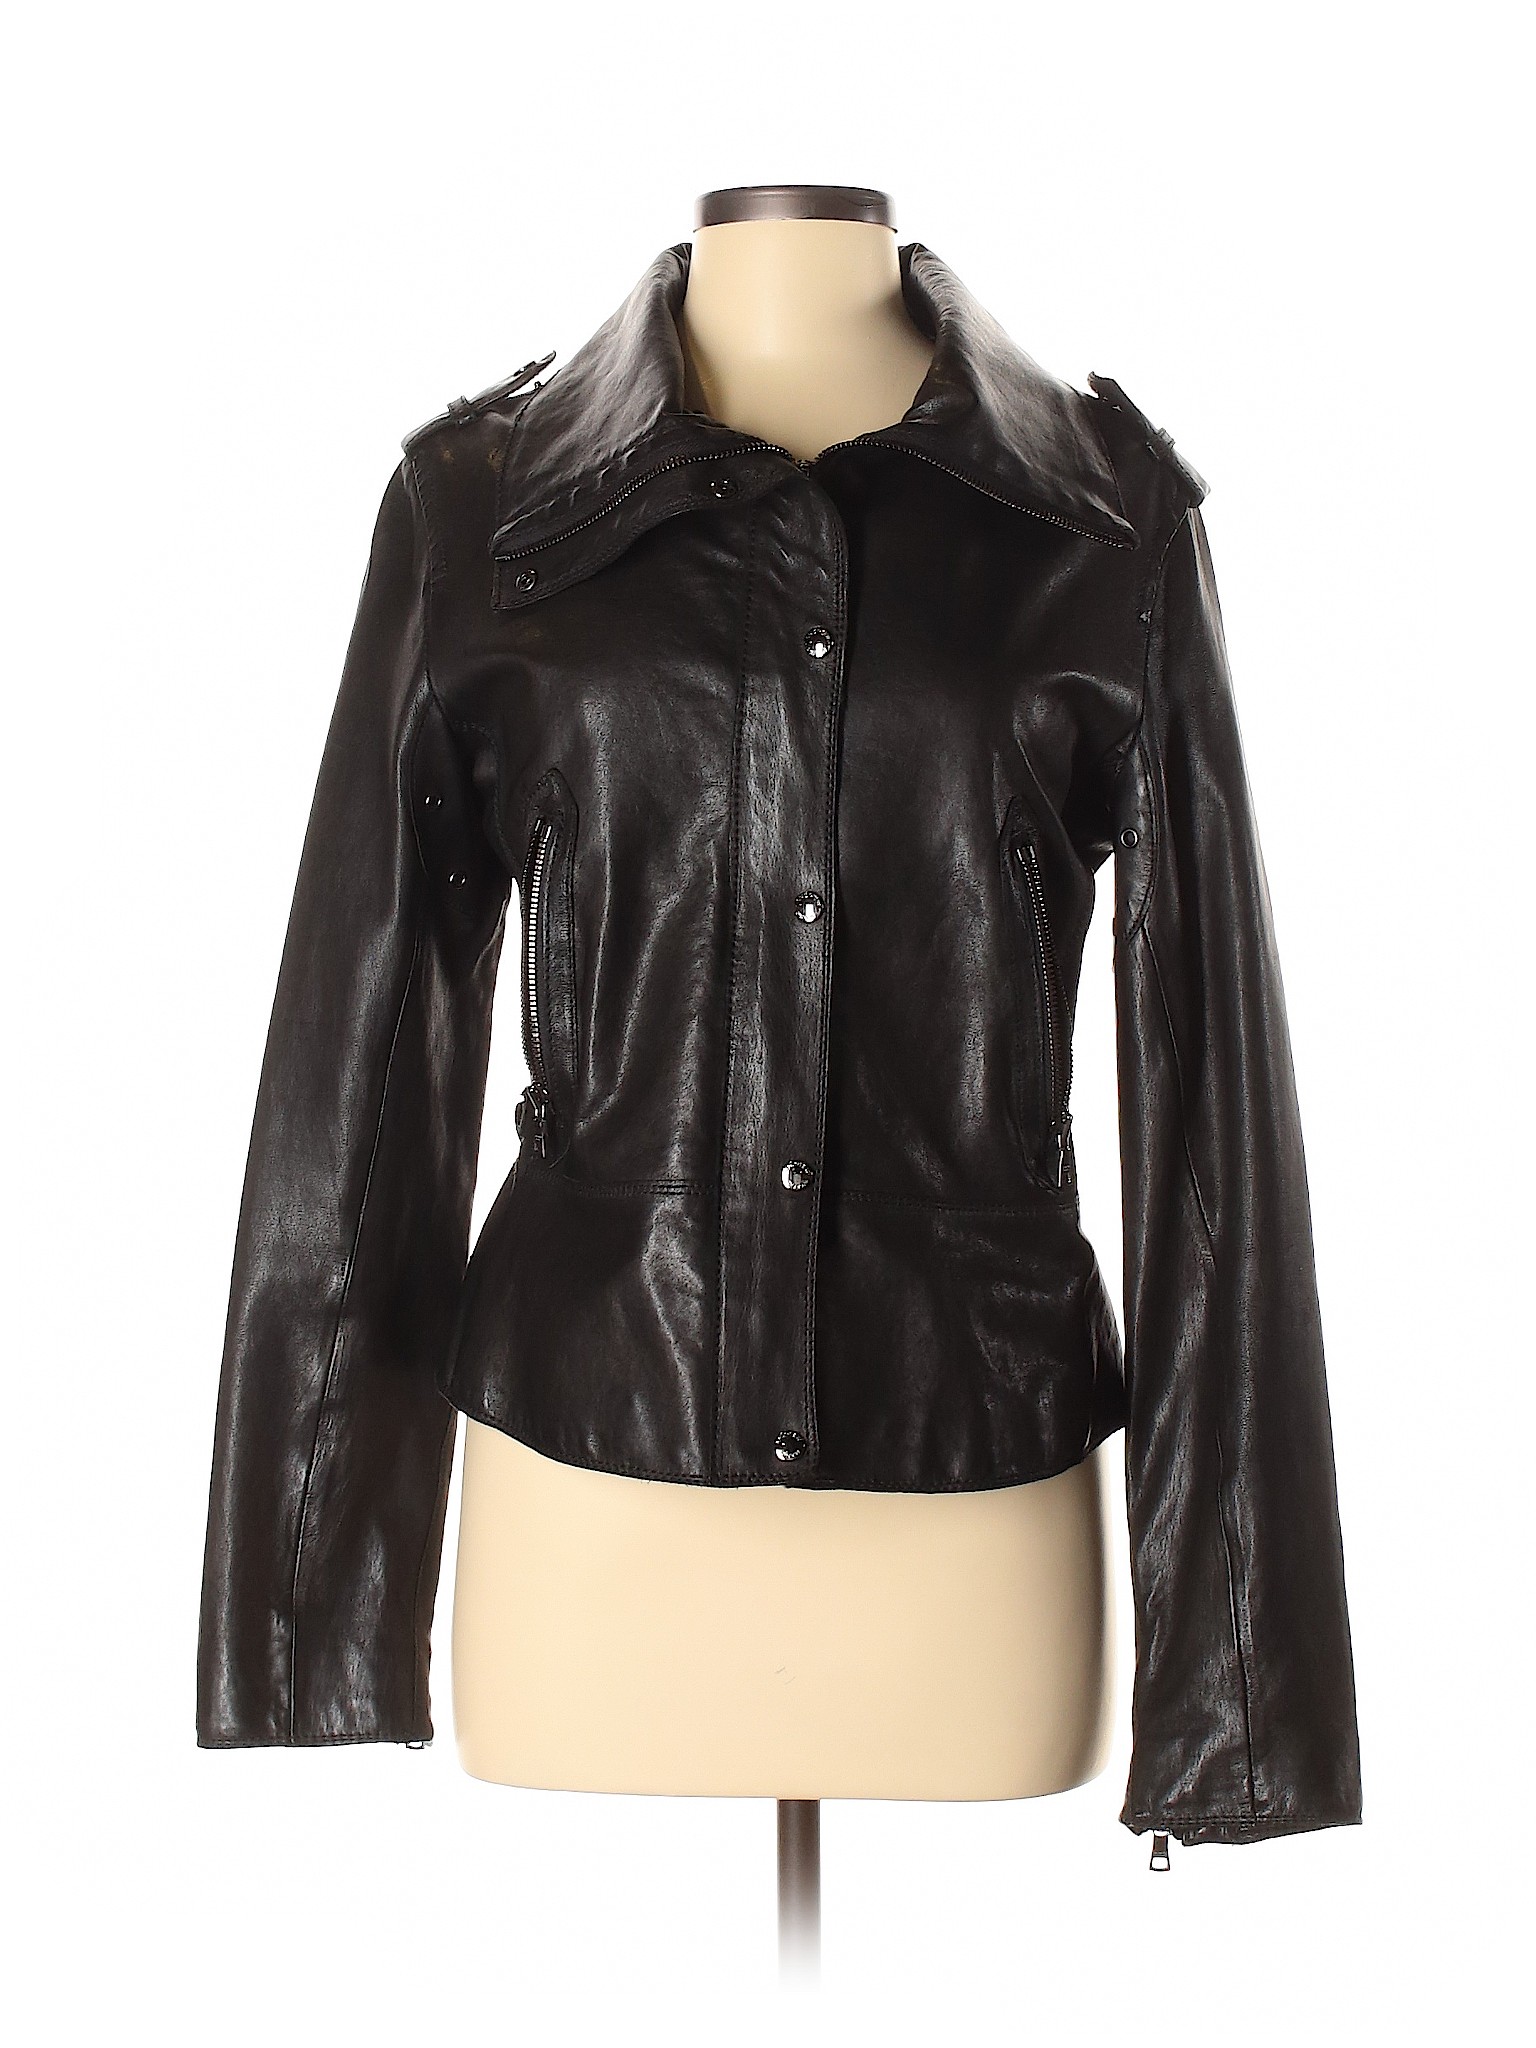 Andrew Marc Women Black Leather Jacket M | eBay